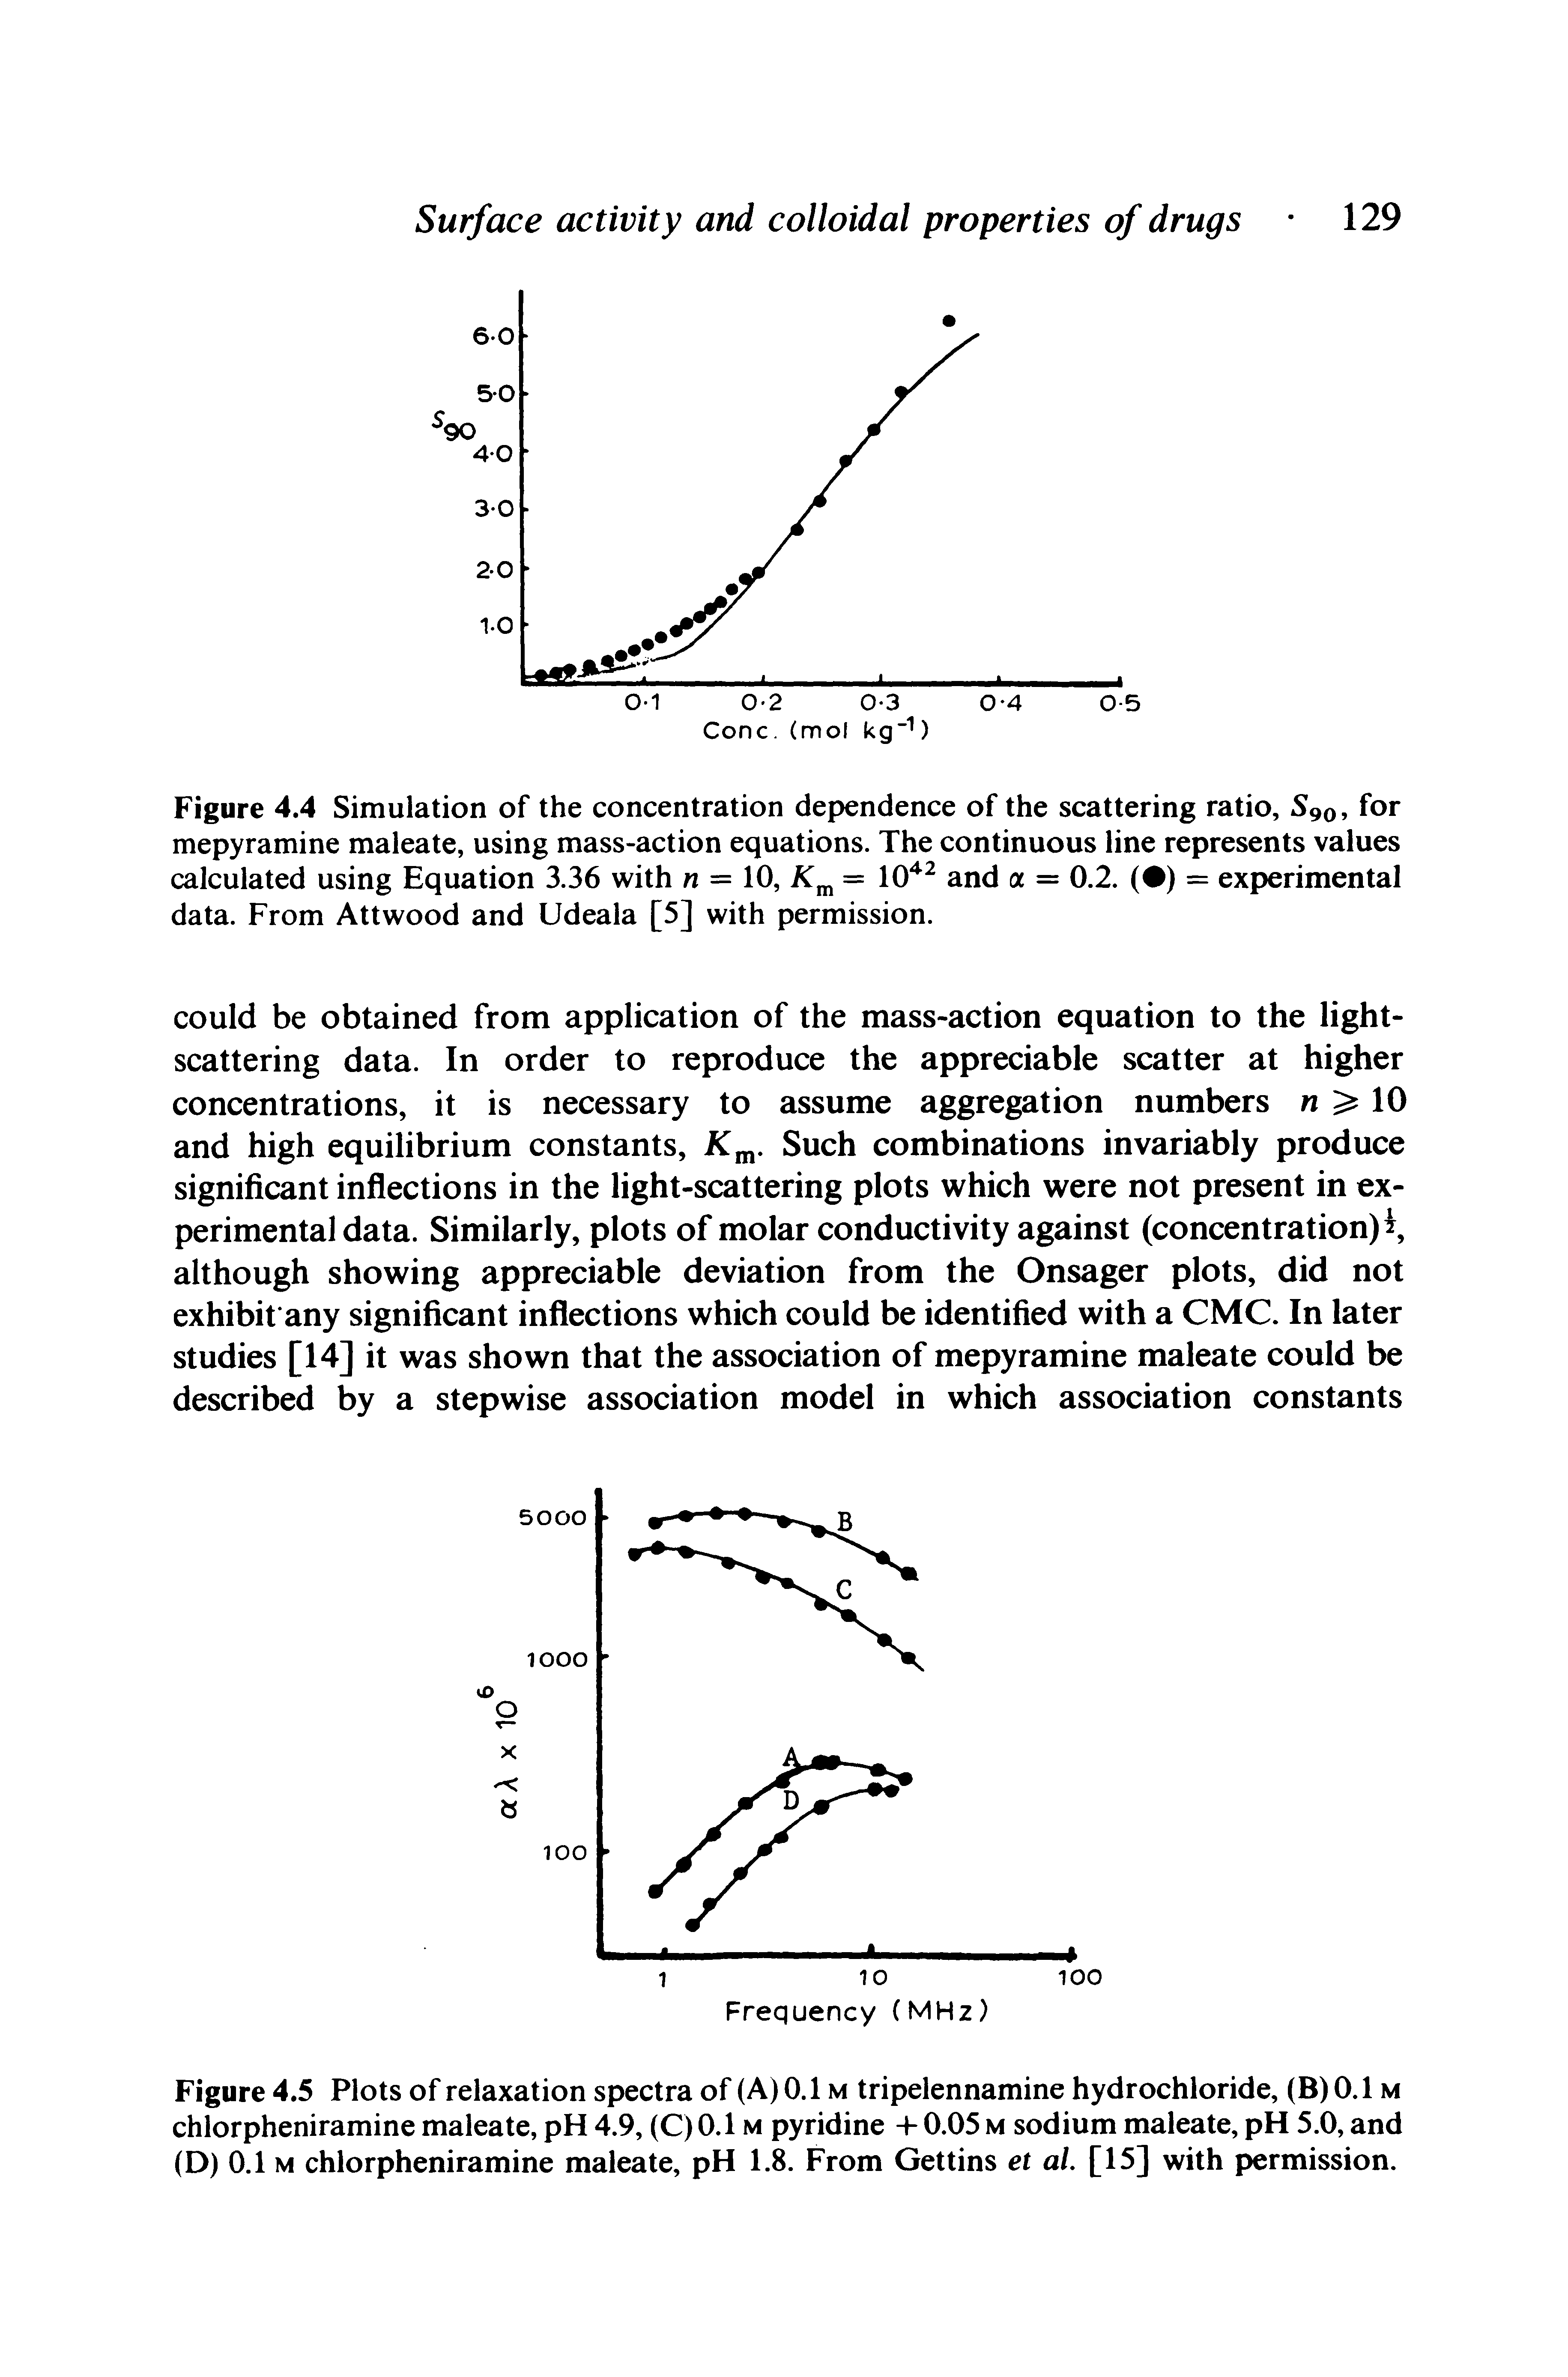 Figure 4.5 Plots of relaxation spectra of (A) 0.1 m tripelennamine hydrochloride, (B) 0.1 m chlorpheniramine maleate, pH 4.9, (C) 0.1 m pyridine -h 0.05 m sodium maleate, pH 5.0, and (D) 0.1 M chlorpheniramine maleate, pH 1.8. From Gettins et al. [15] with permission.